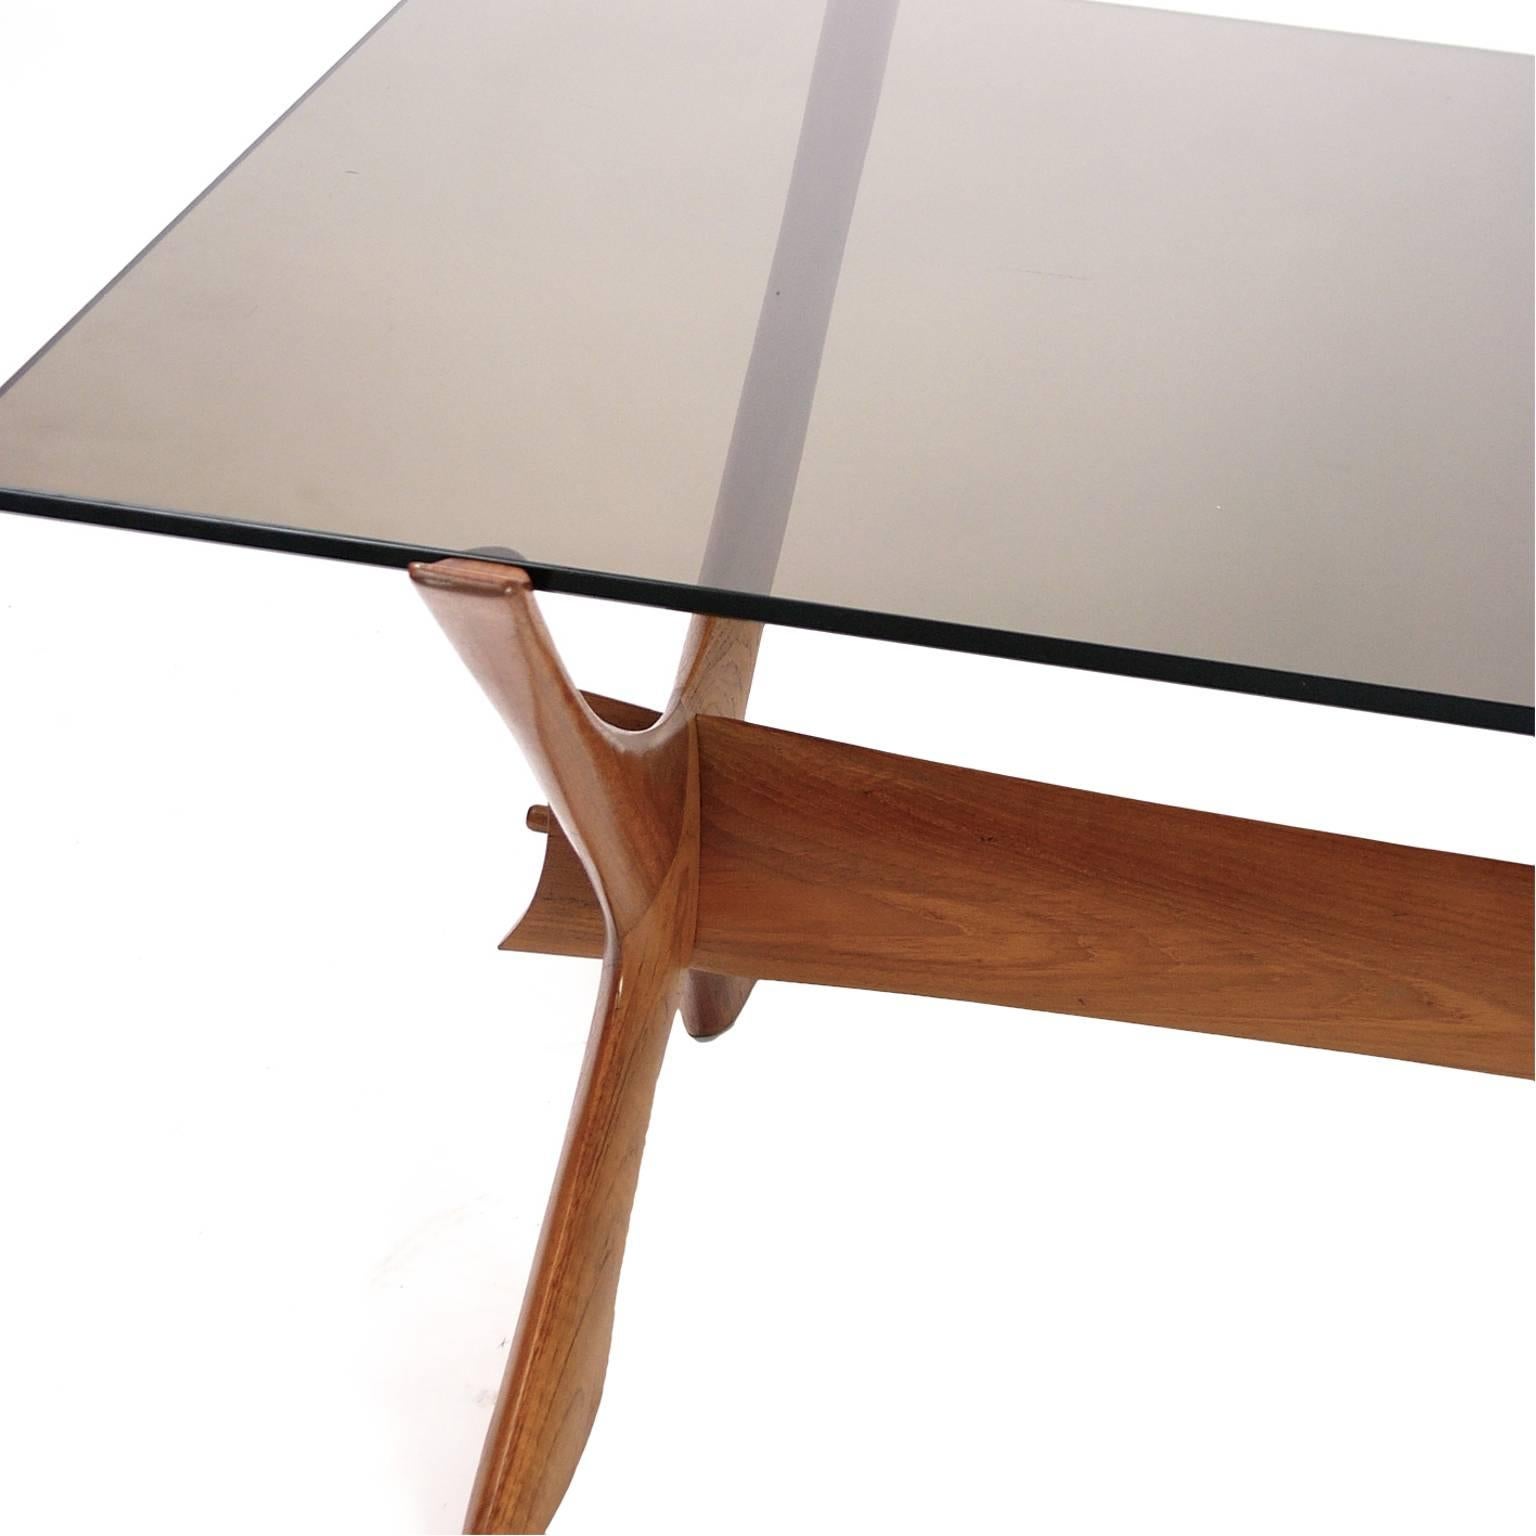 Modern Teak and Smokey Glass x Base Coffee Table by Fredrik Schriever Abeln For Sale 1